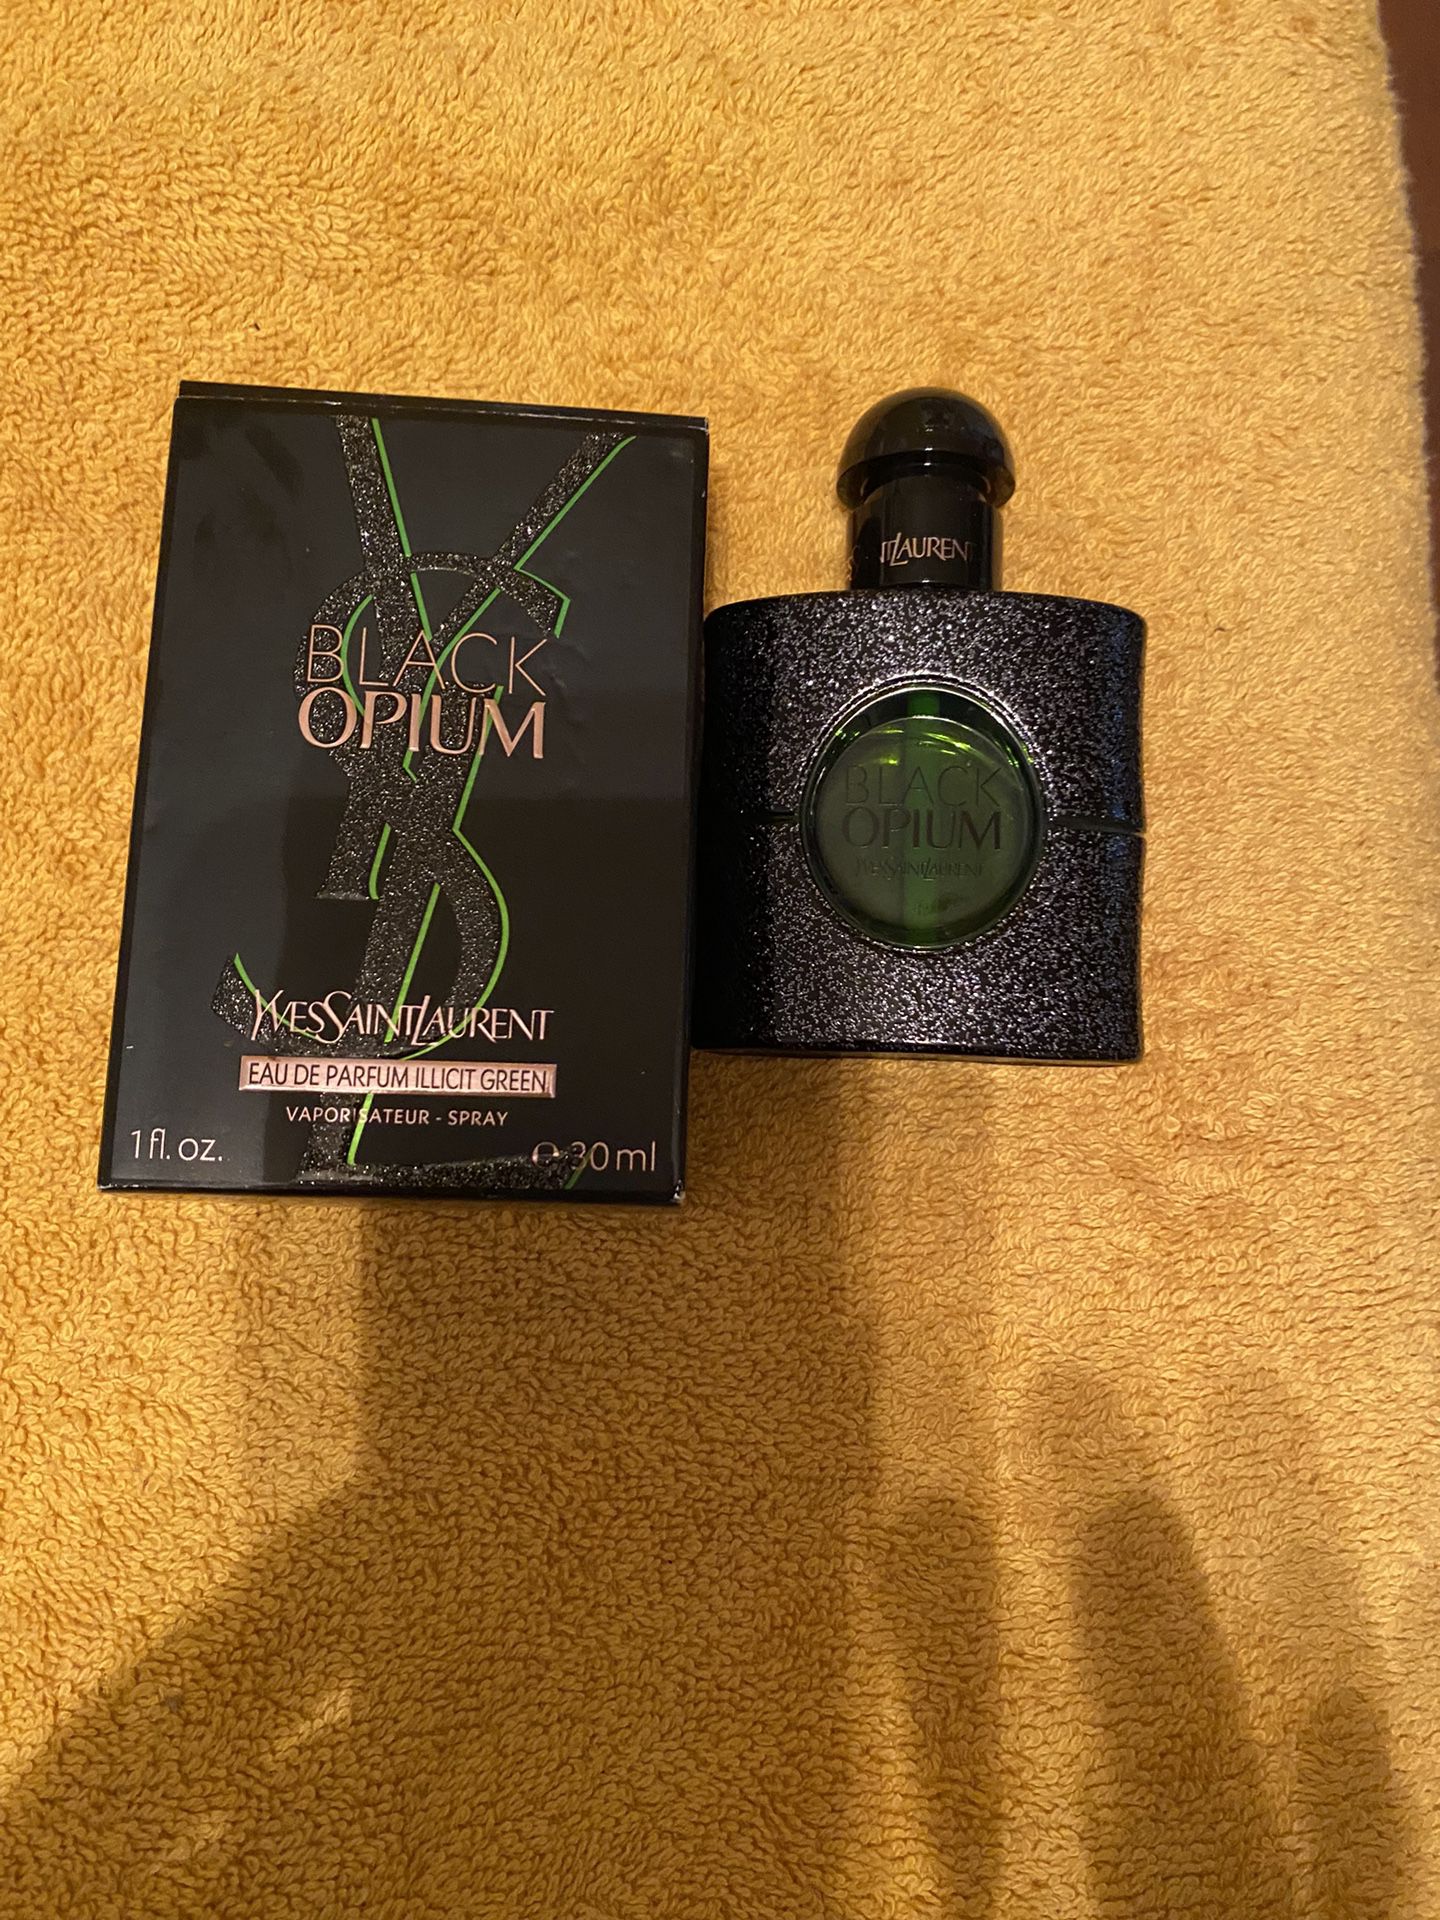 Perfume Black Opium Eau De Parfum Illicit Green 1 Onza